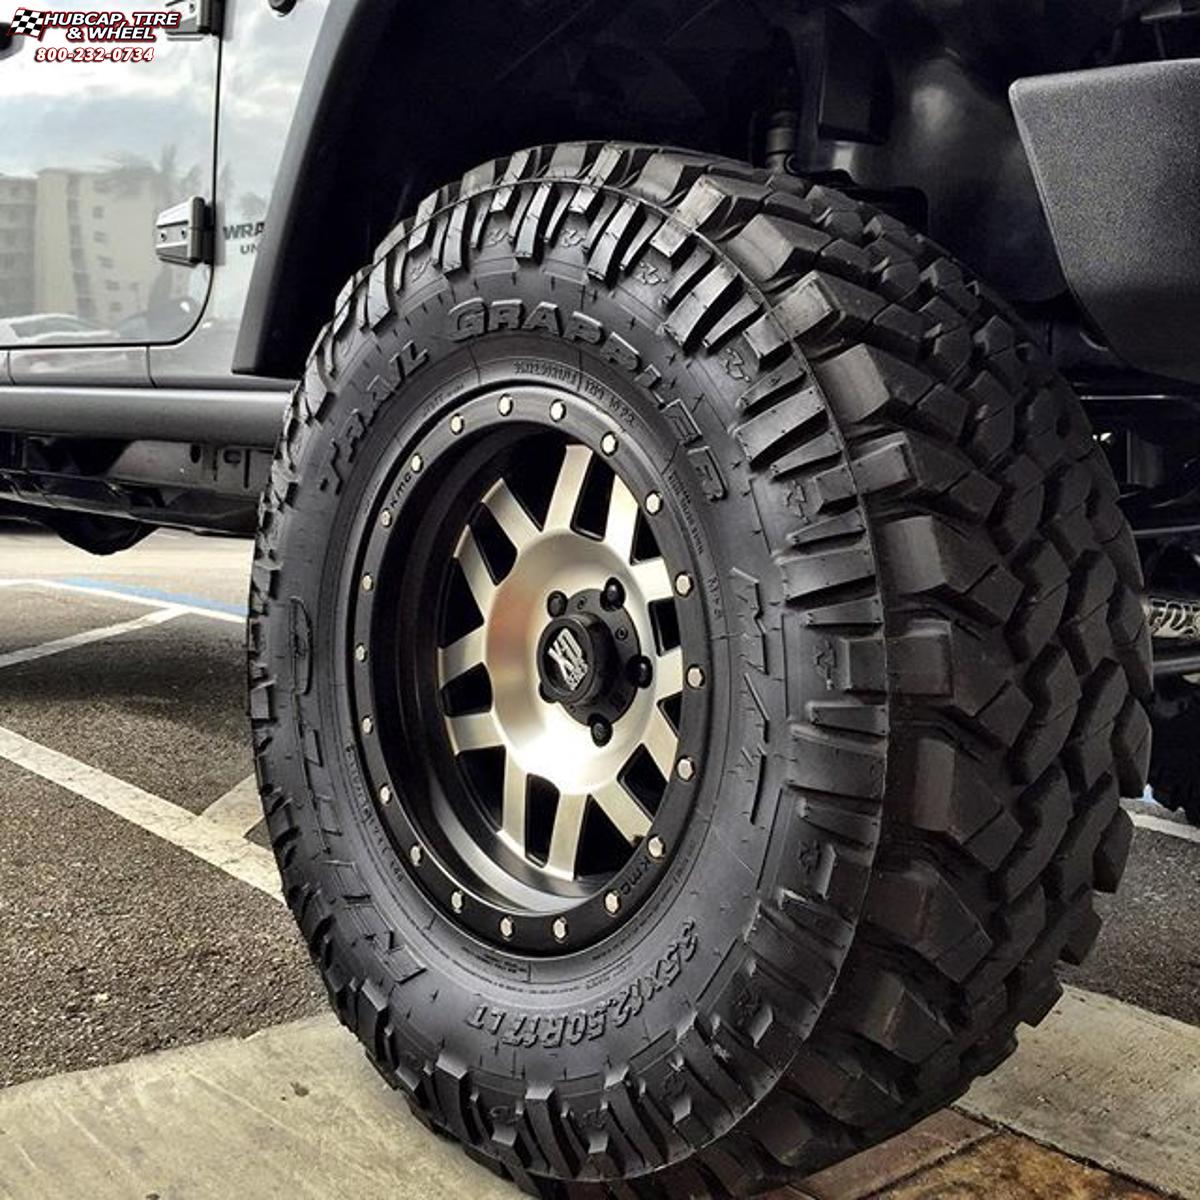 vehicle gallery/jeep wrangler xd series xd128 machete x  Matte Gray Black Ring wheels and rims